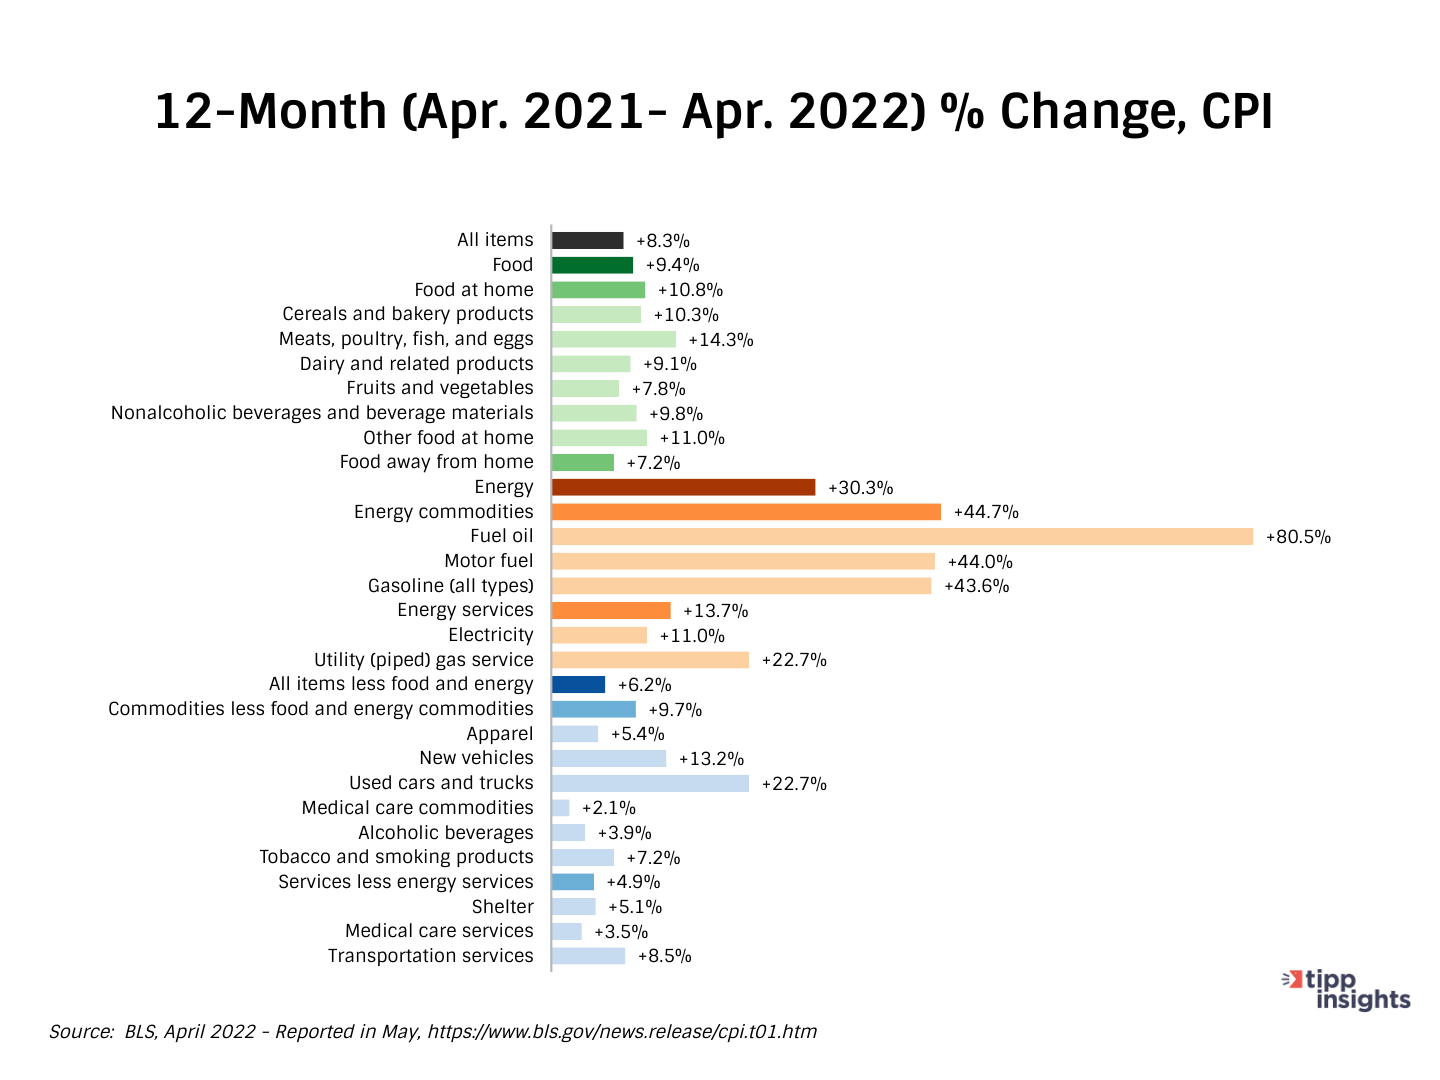 12 month (April 2021 - April 2022) % Change CPI